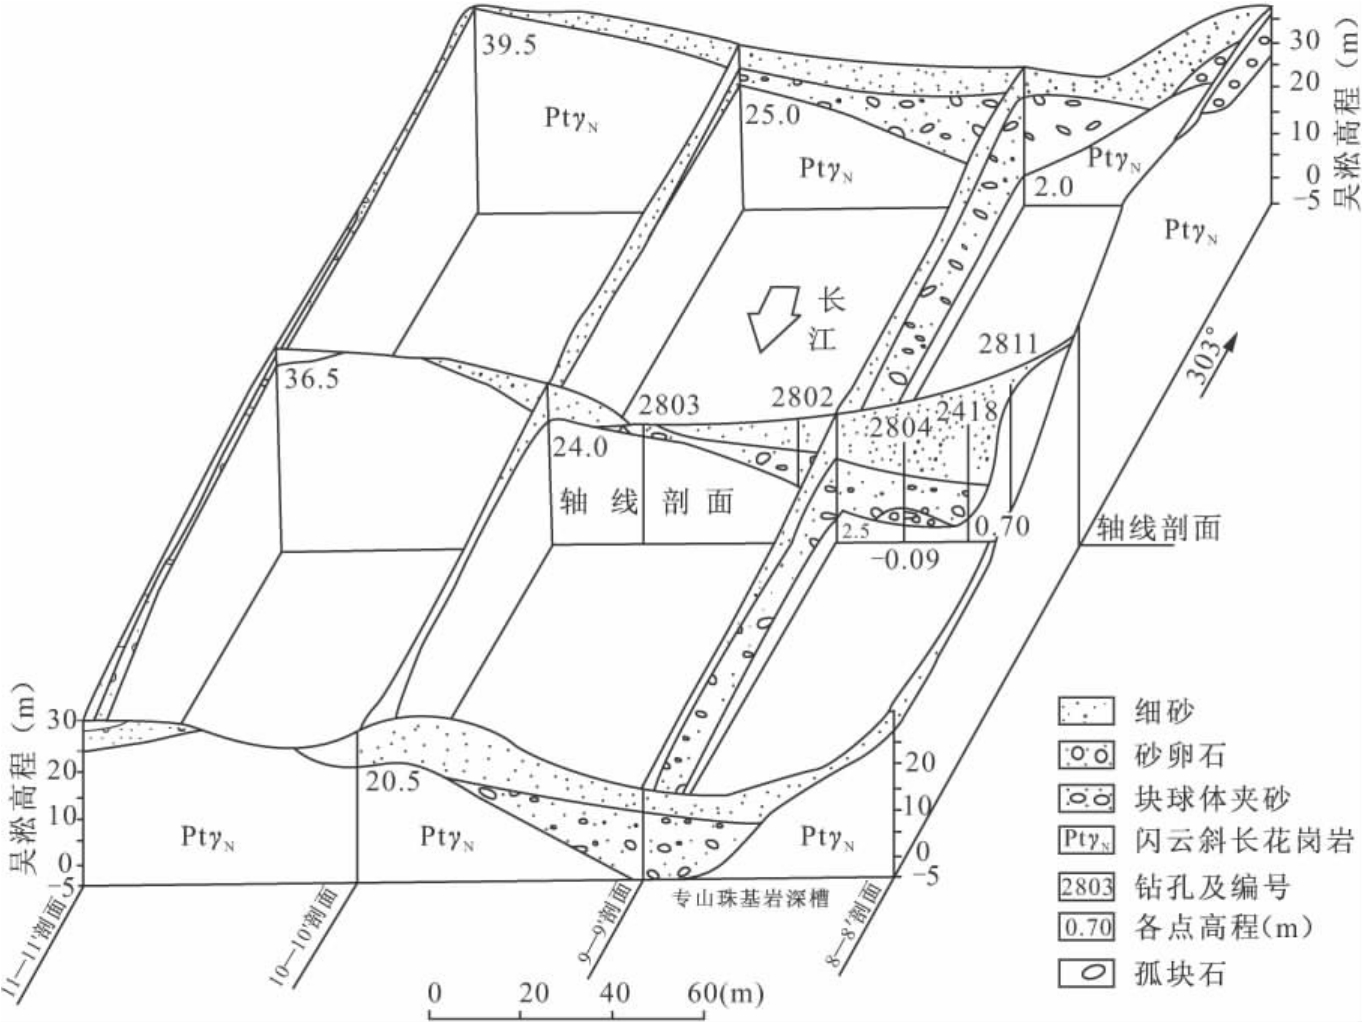 水下地形测绘 - 广州蓝图地理信息技术有限公司 - 广州蓝图地理信息技术有限公司